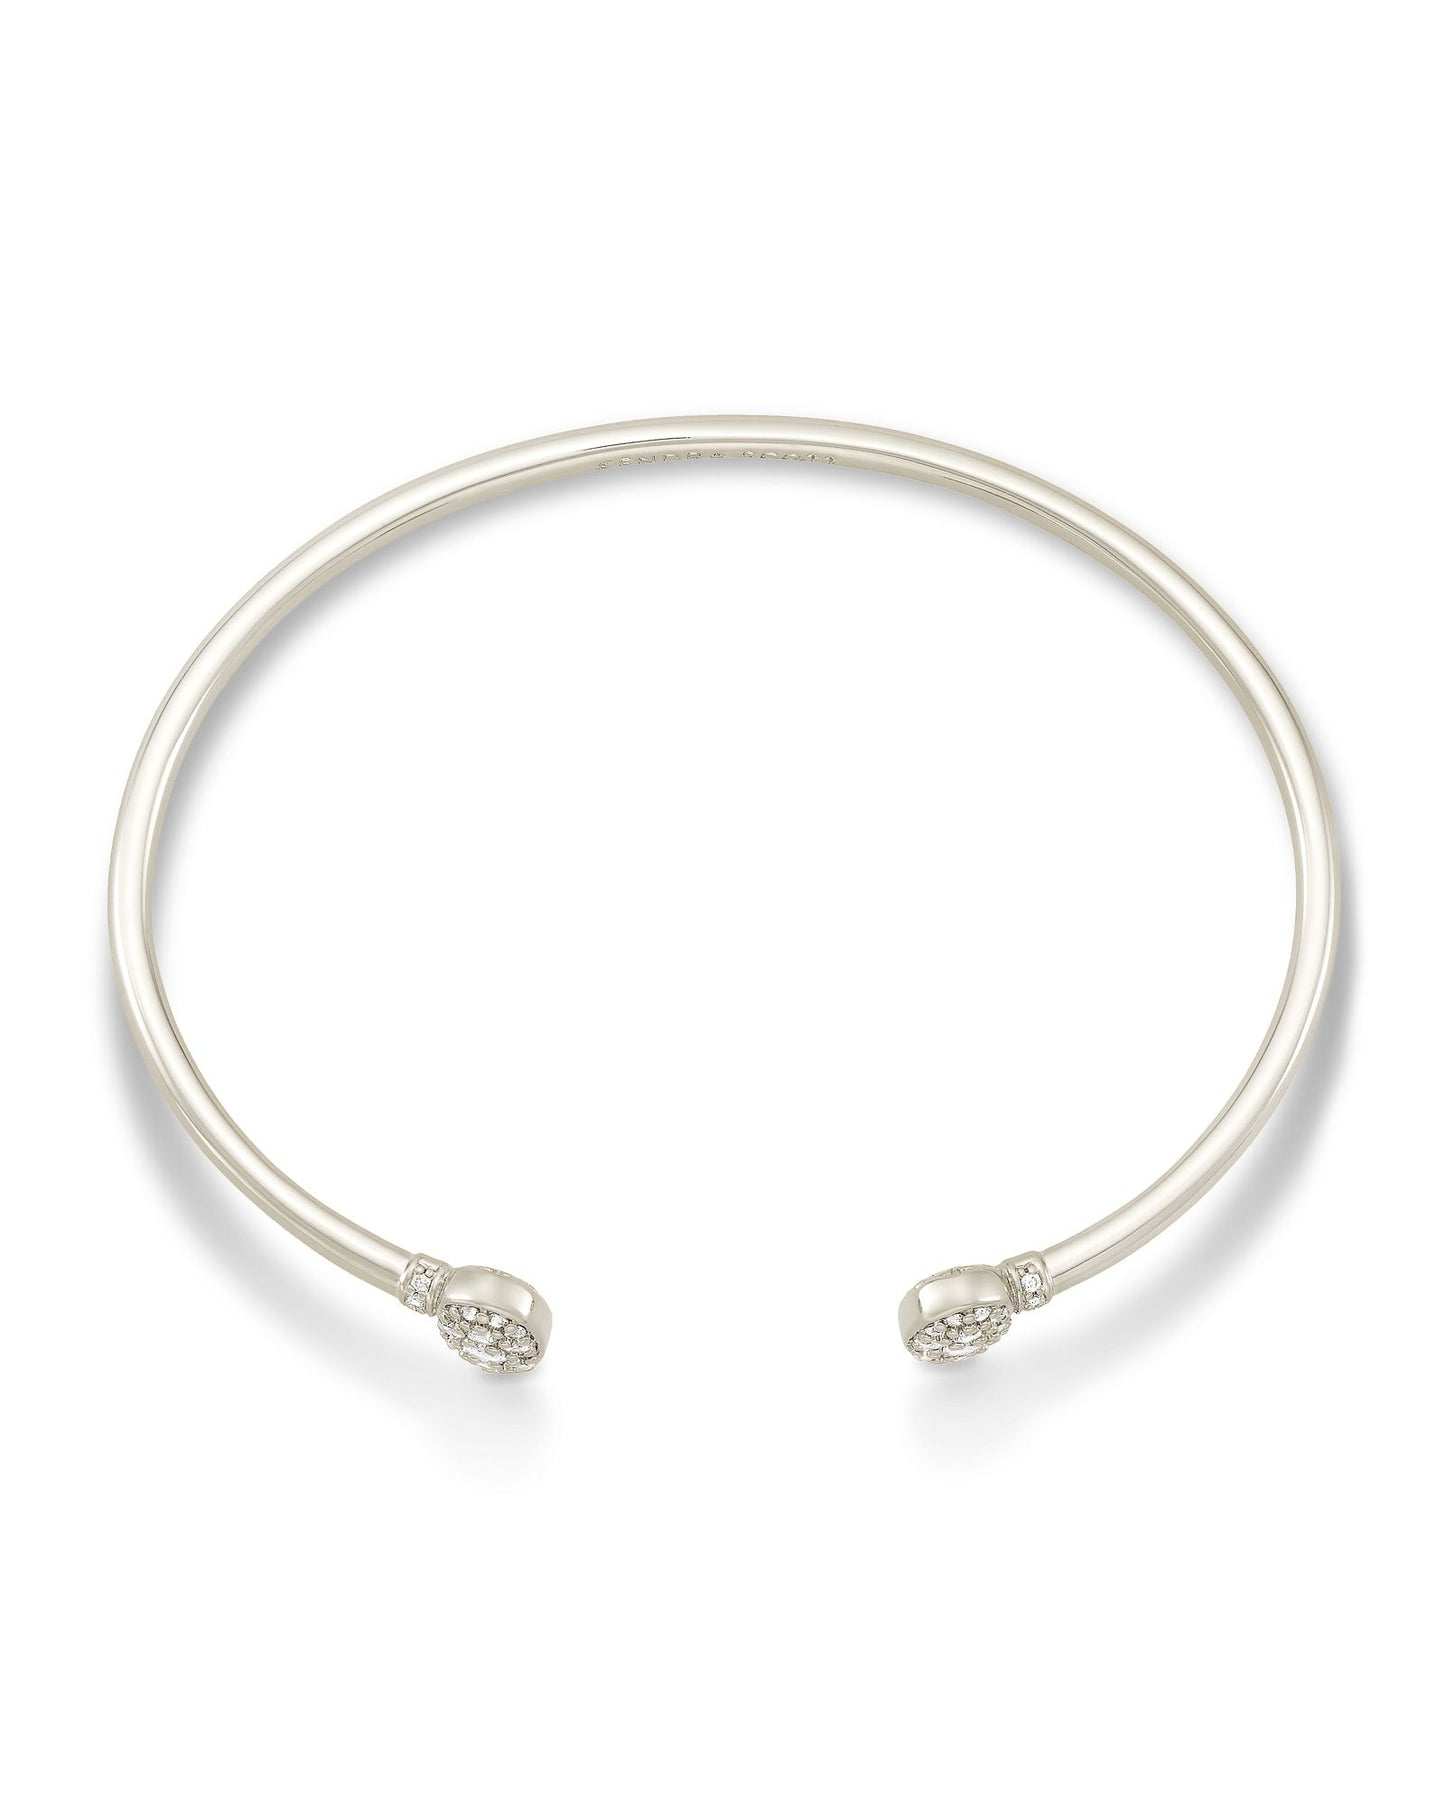 Kendra Scott Grayson Crystal Cuff Bracelet - Rhodium Metal White